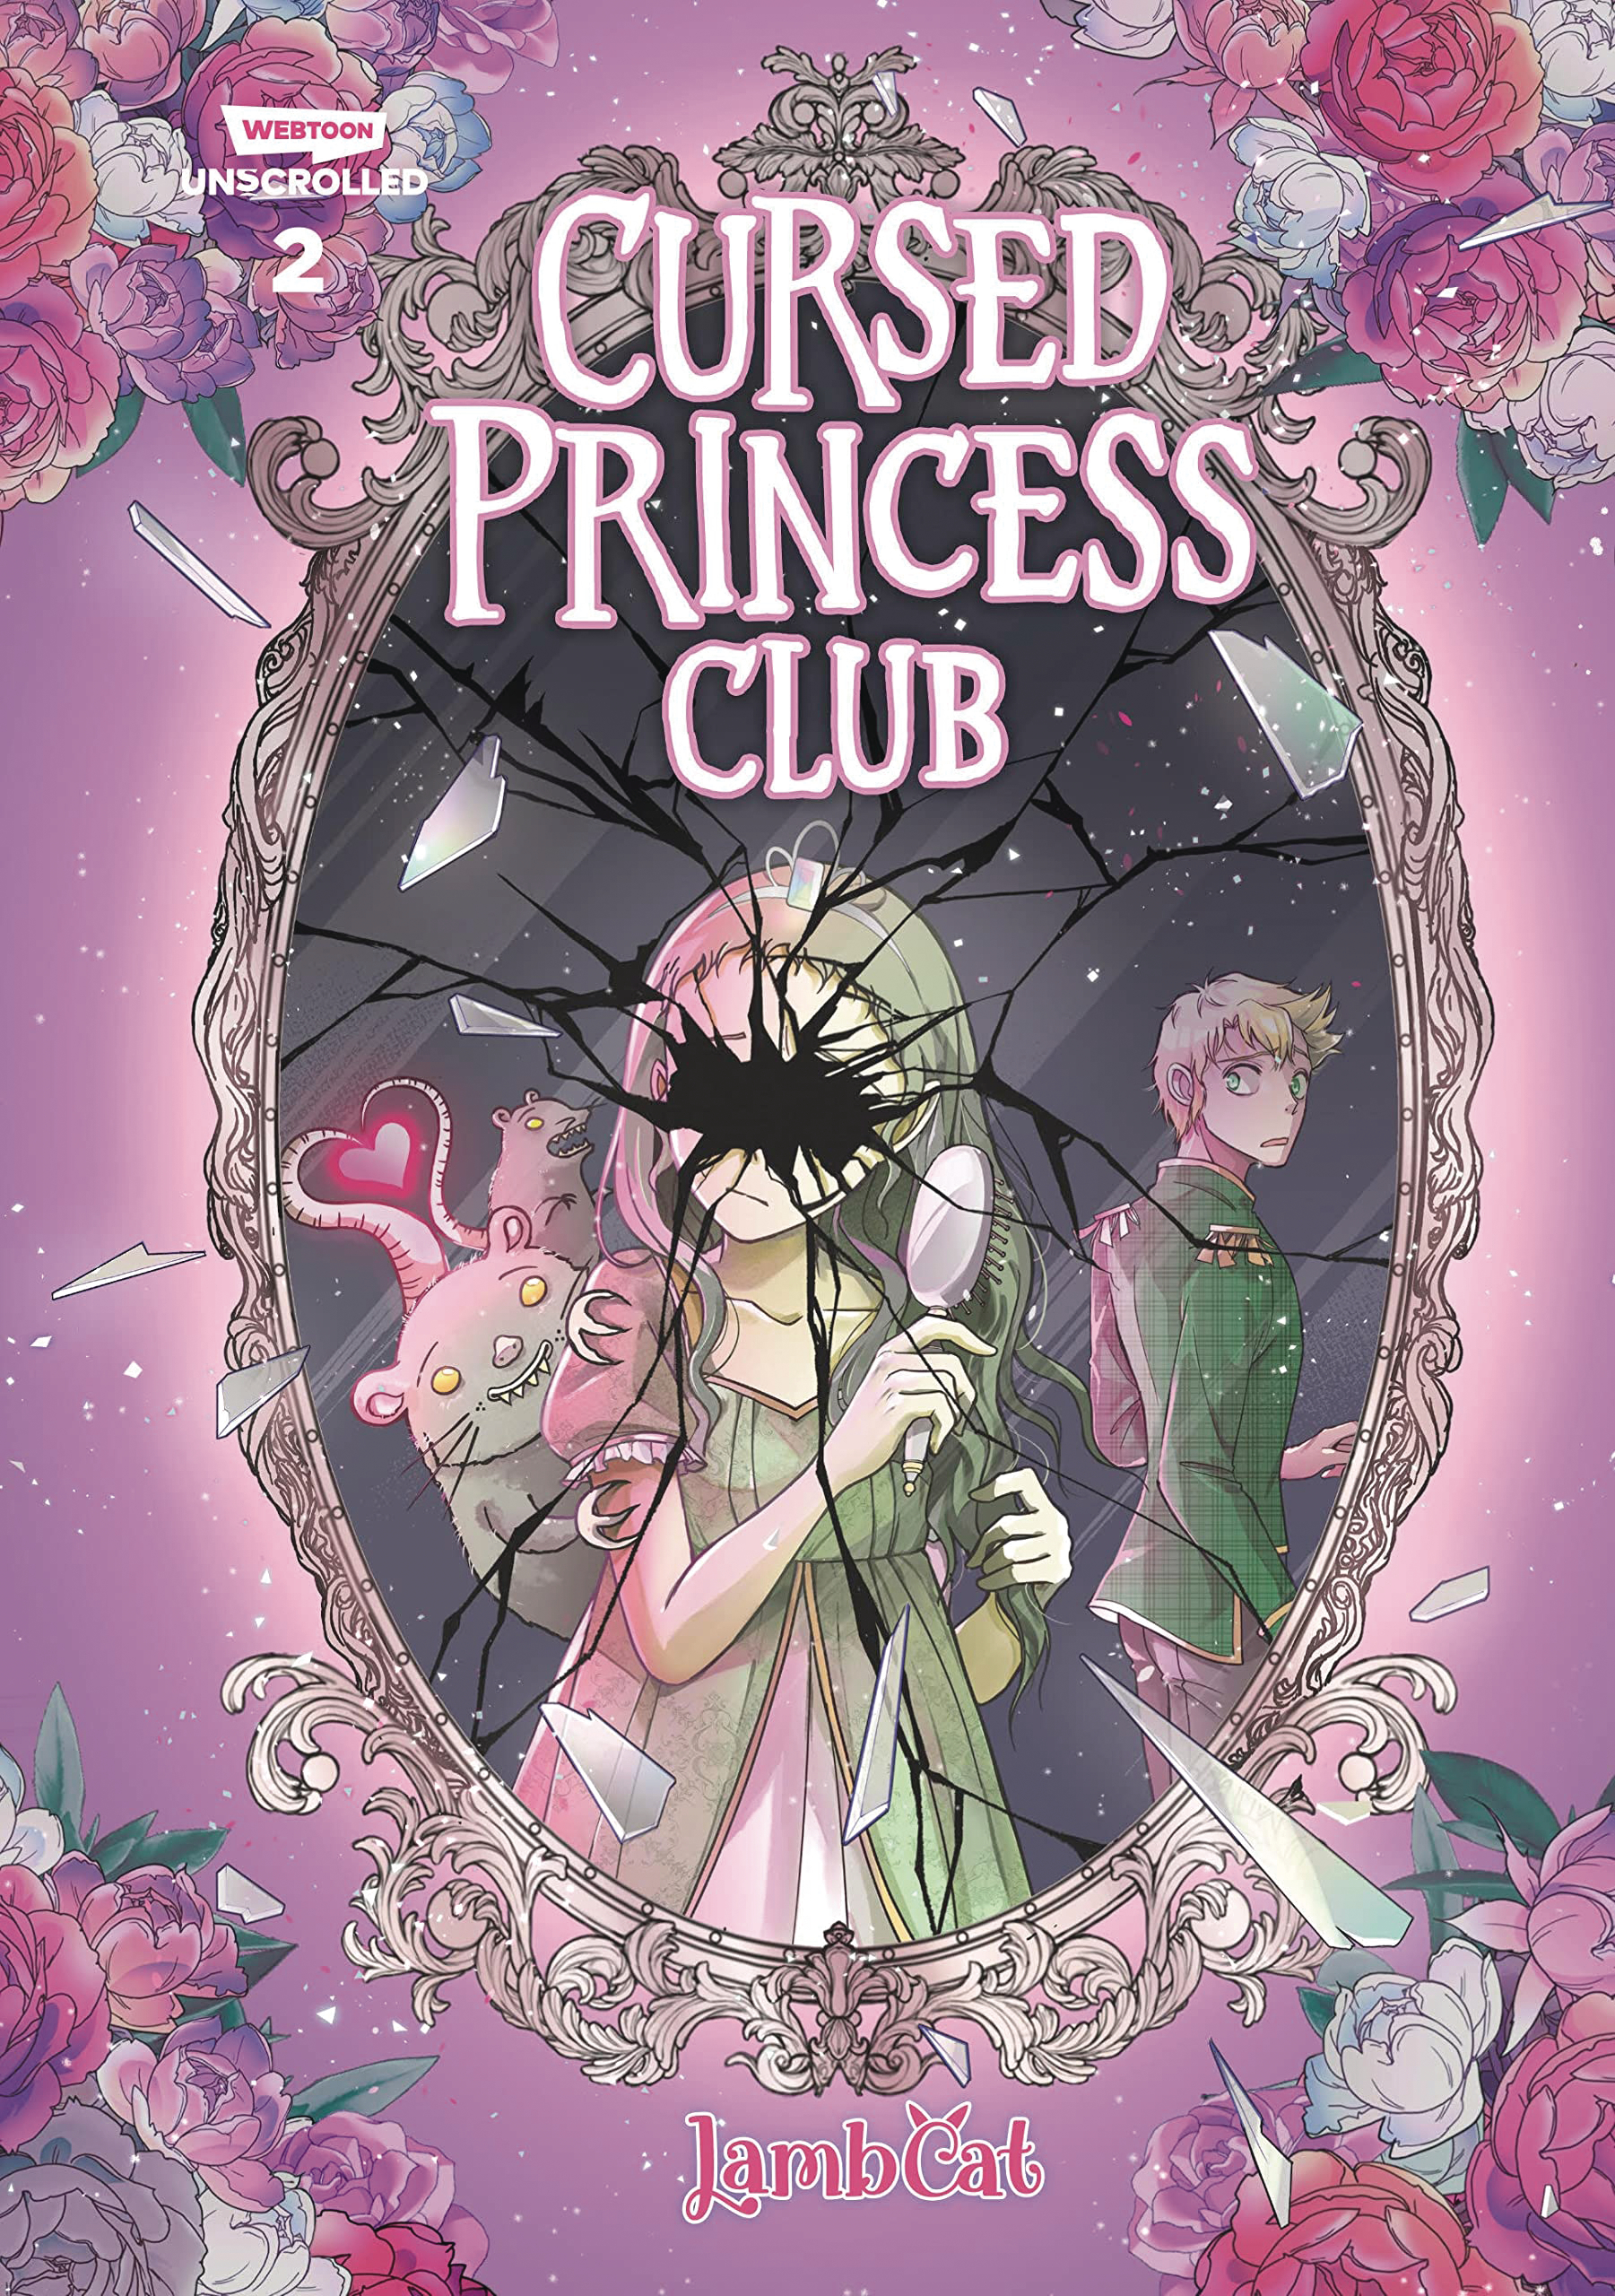 Cursed Princess Club Graphic Novel Volume 2